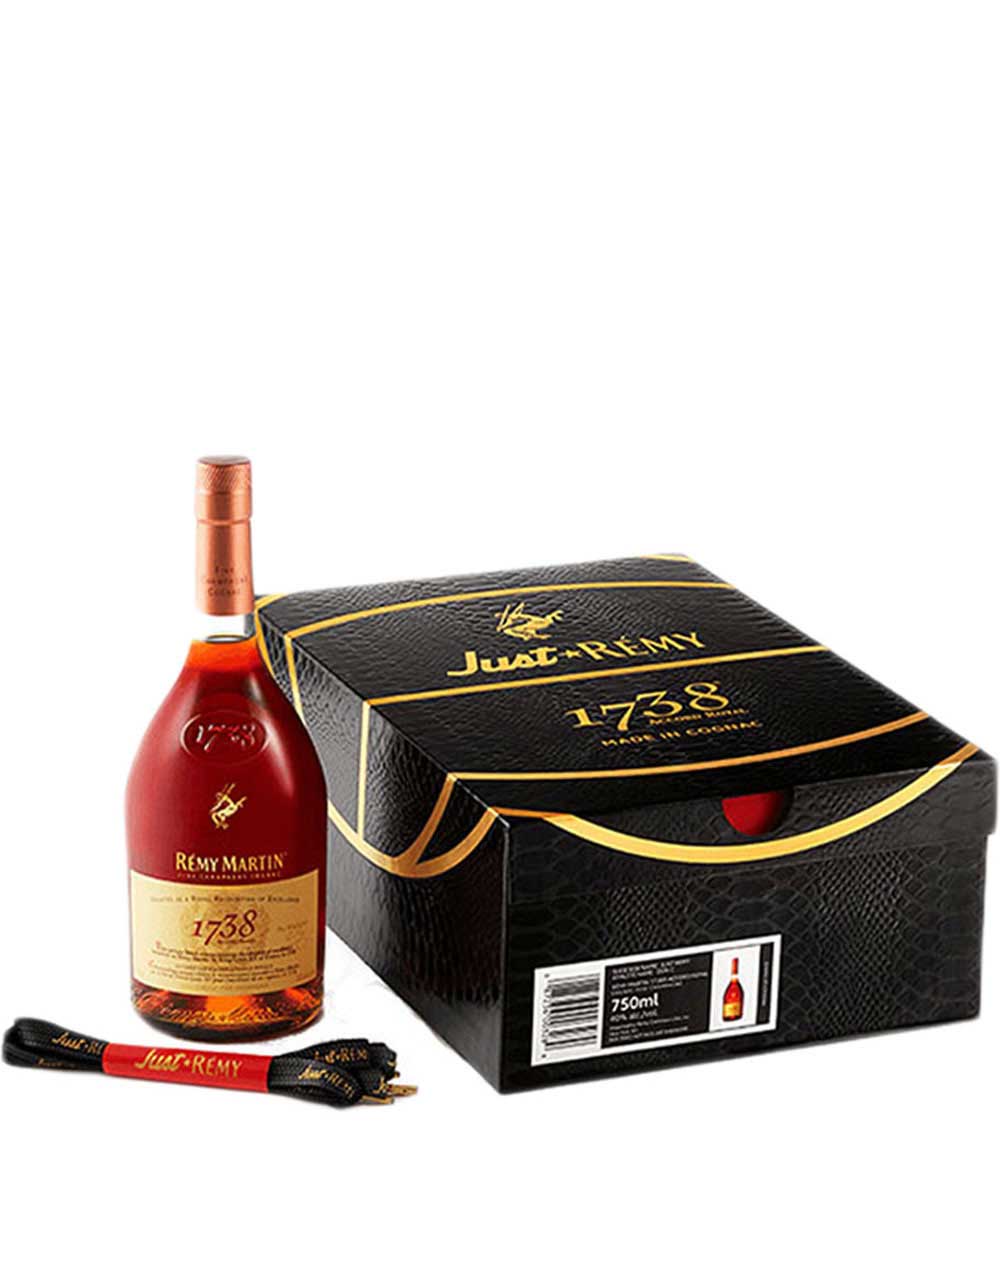 Hennessy 200th Anniversary VSOP Privilge Cognac